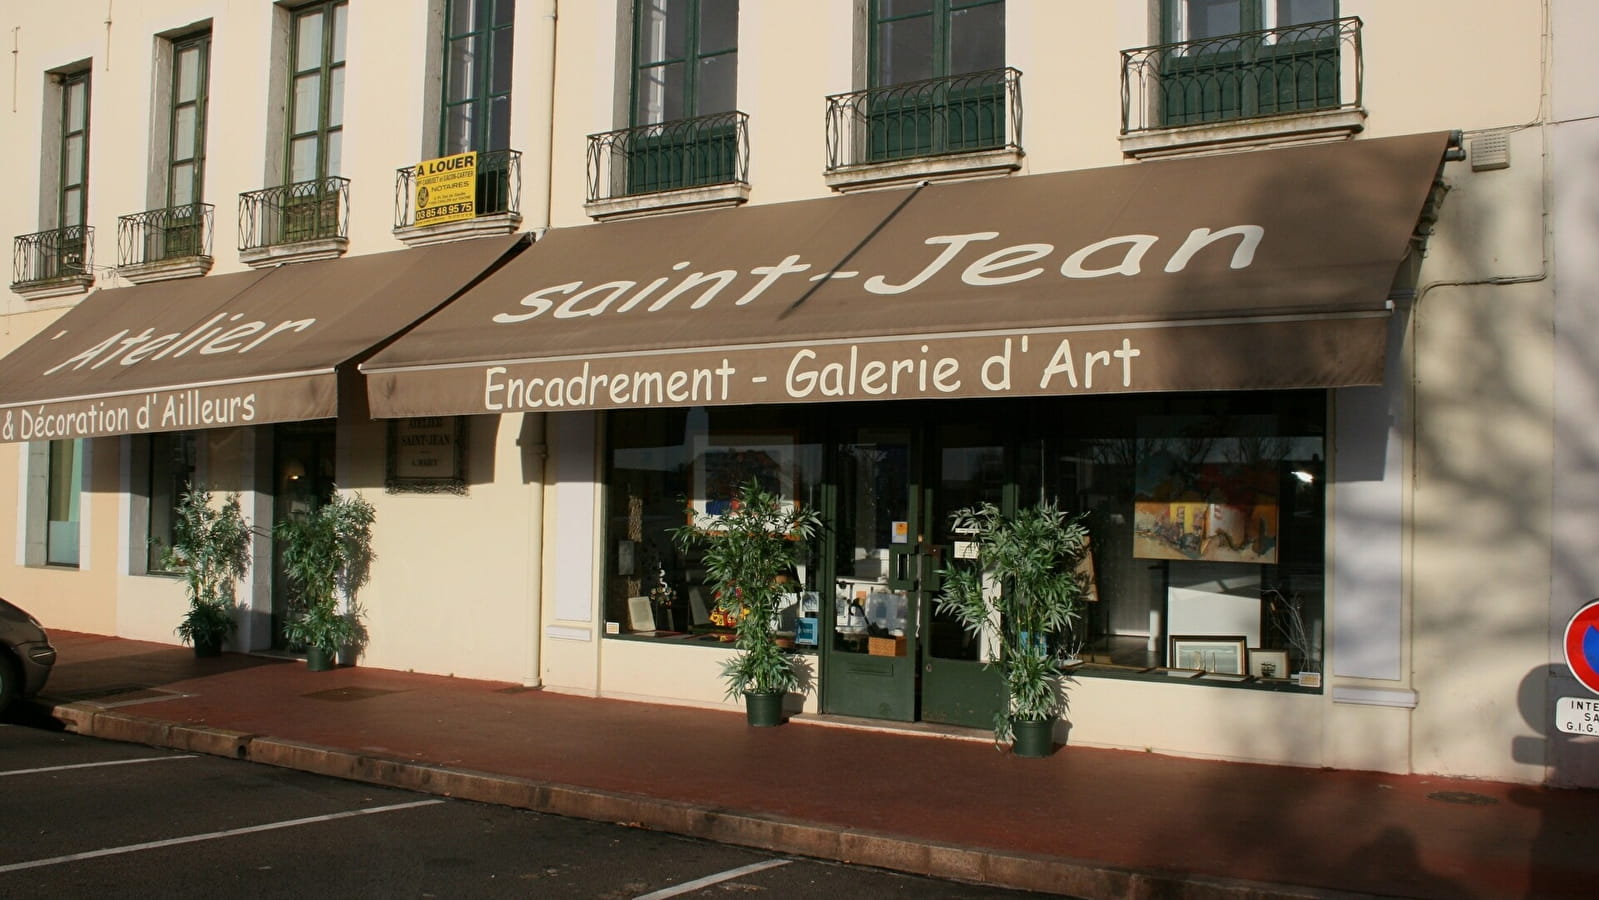 Atelier Saint-Jean